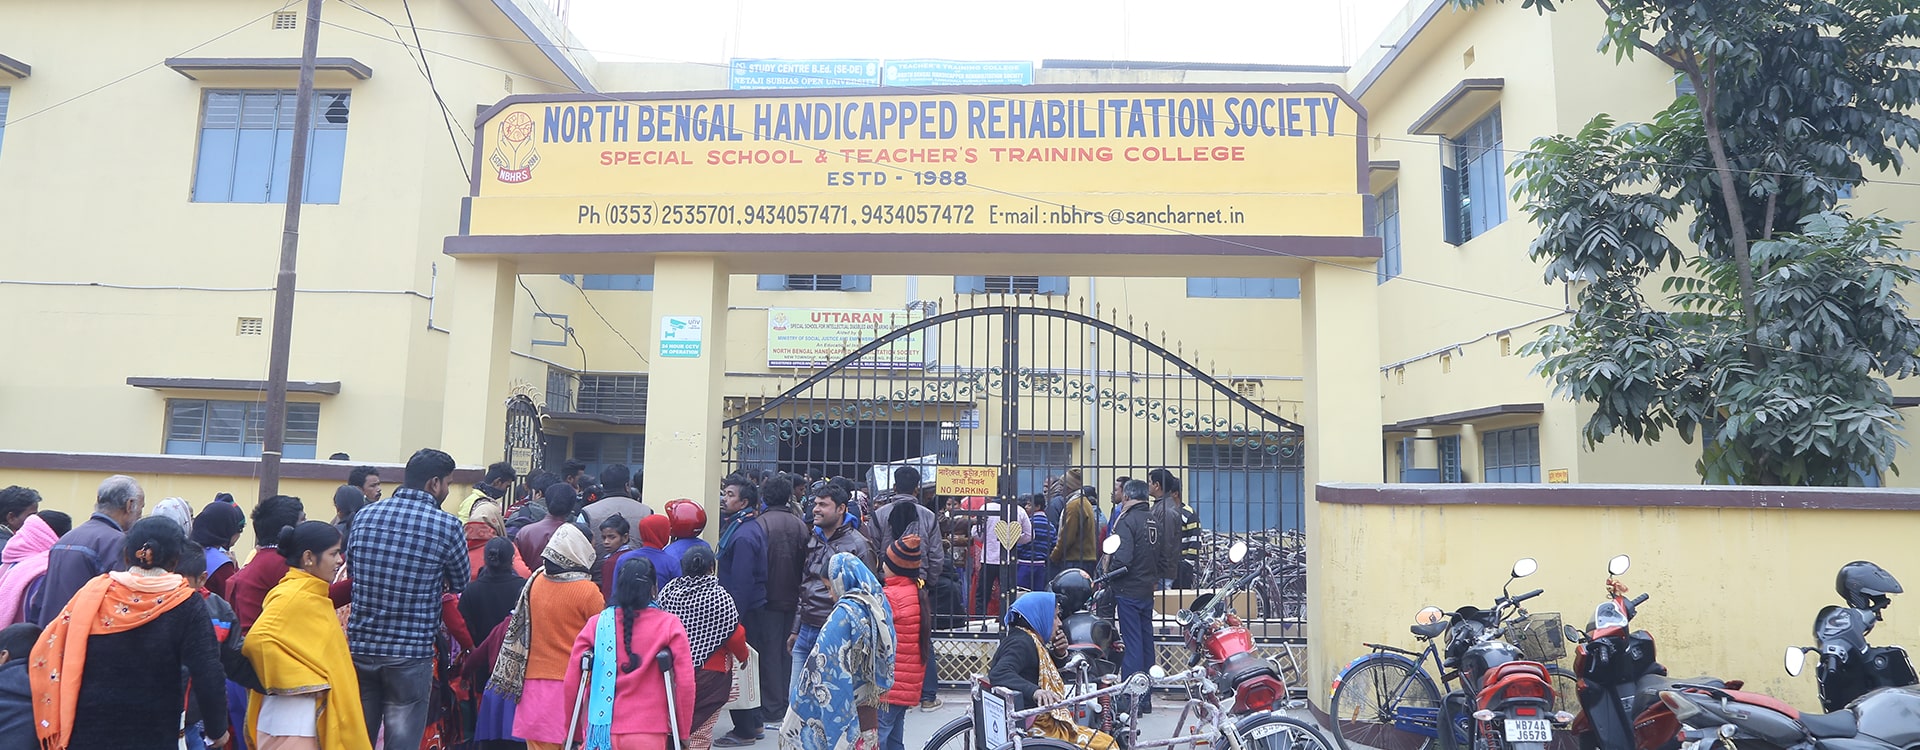 North Bengal Handicapped Rehabilitation Society